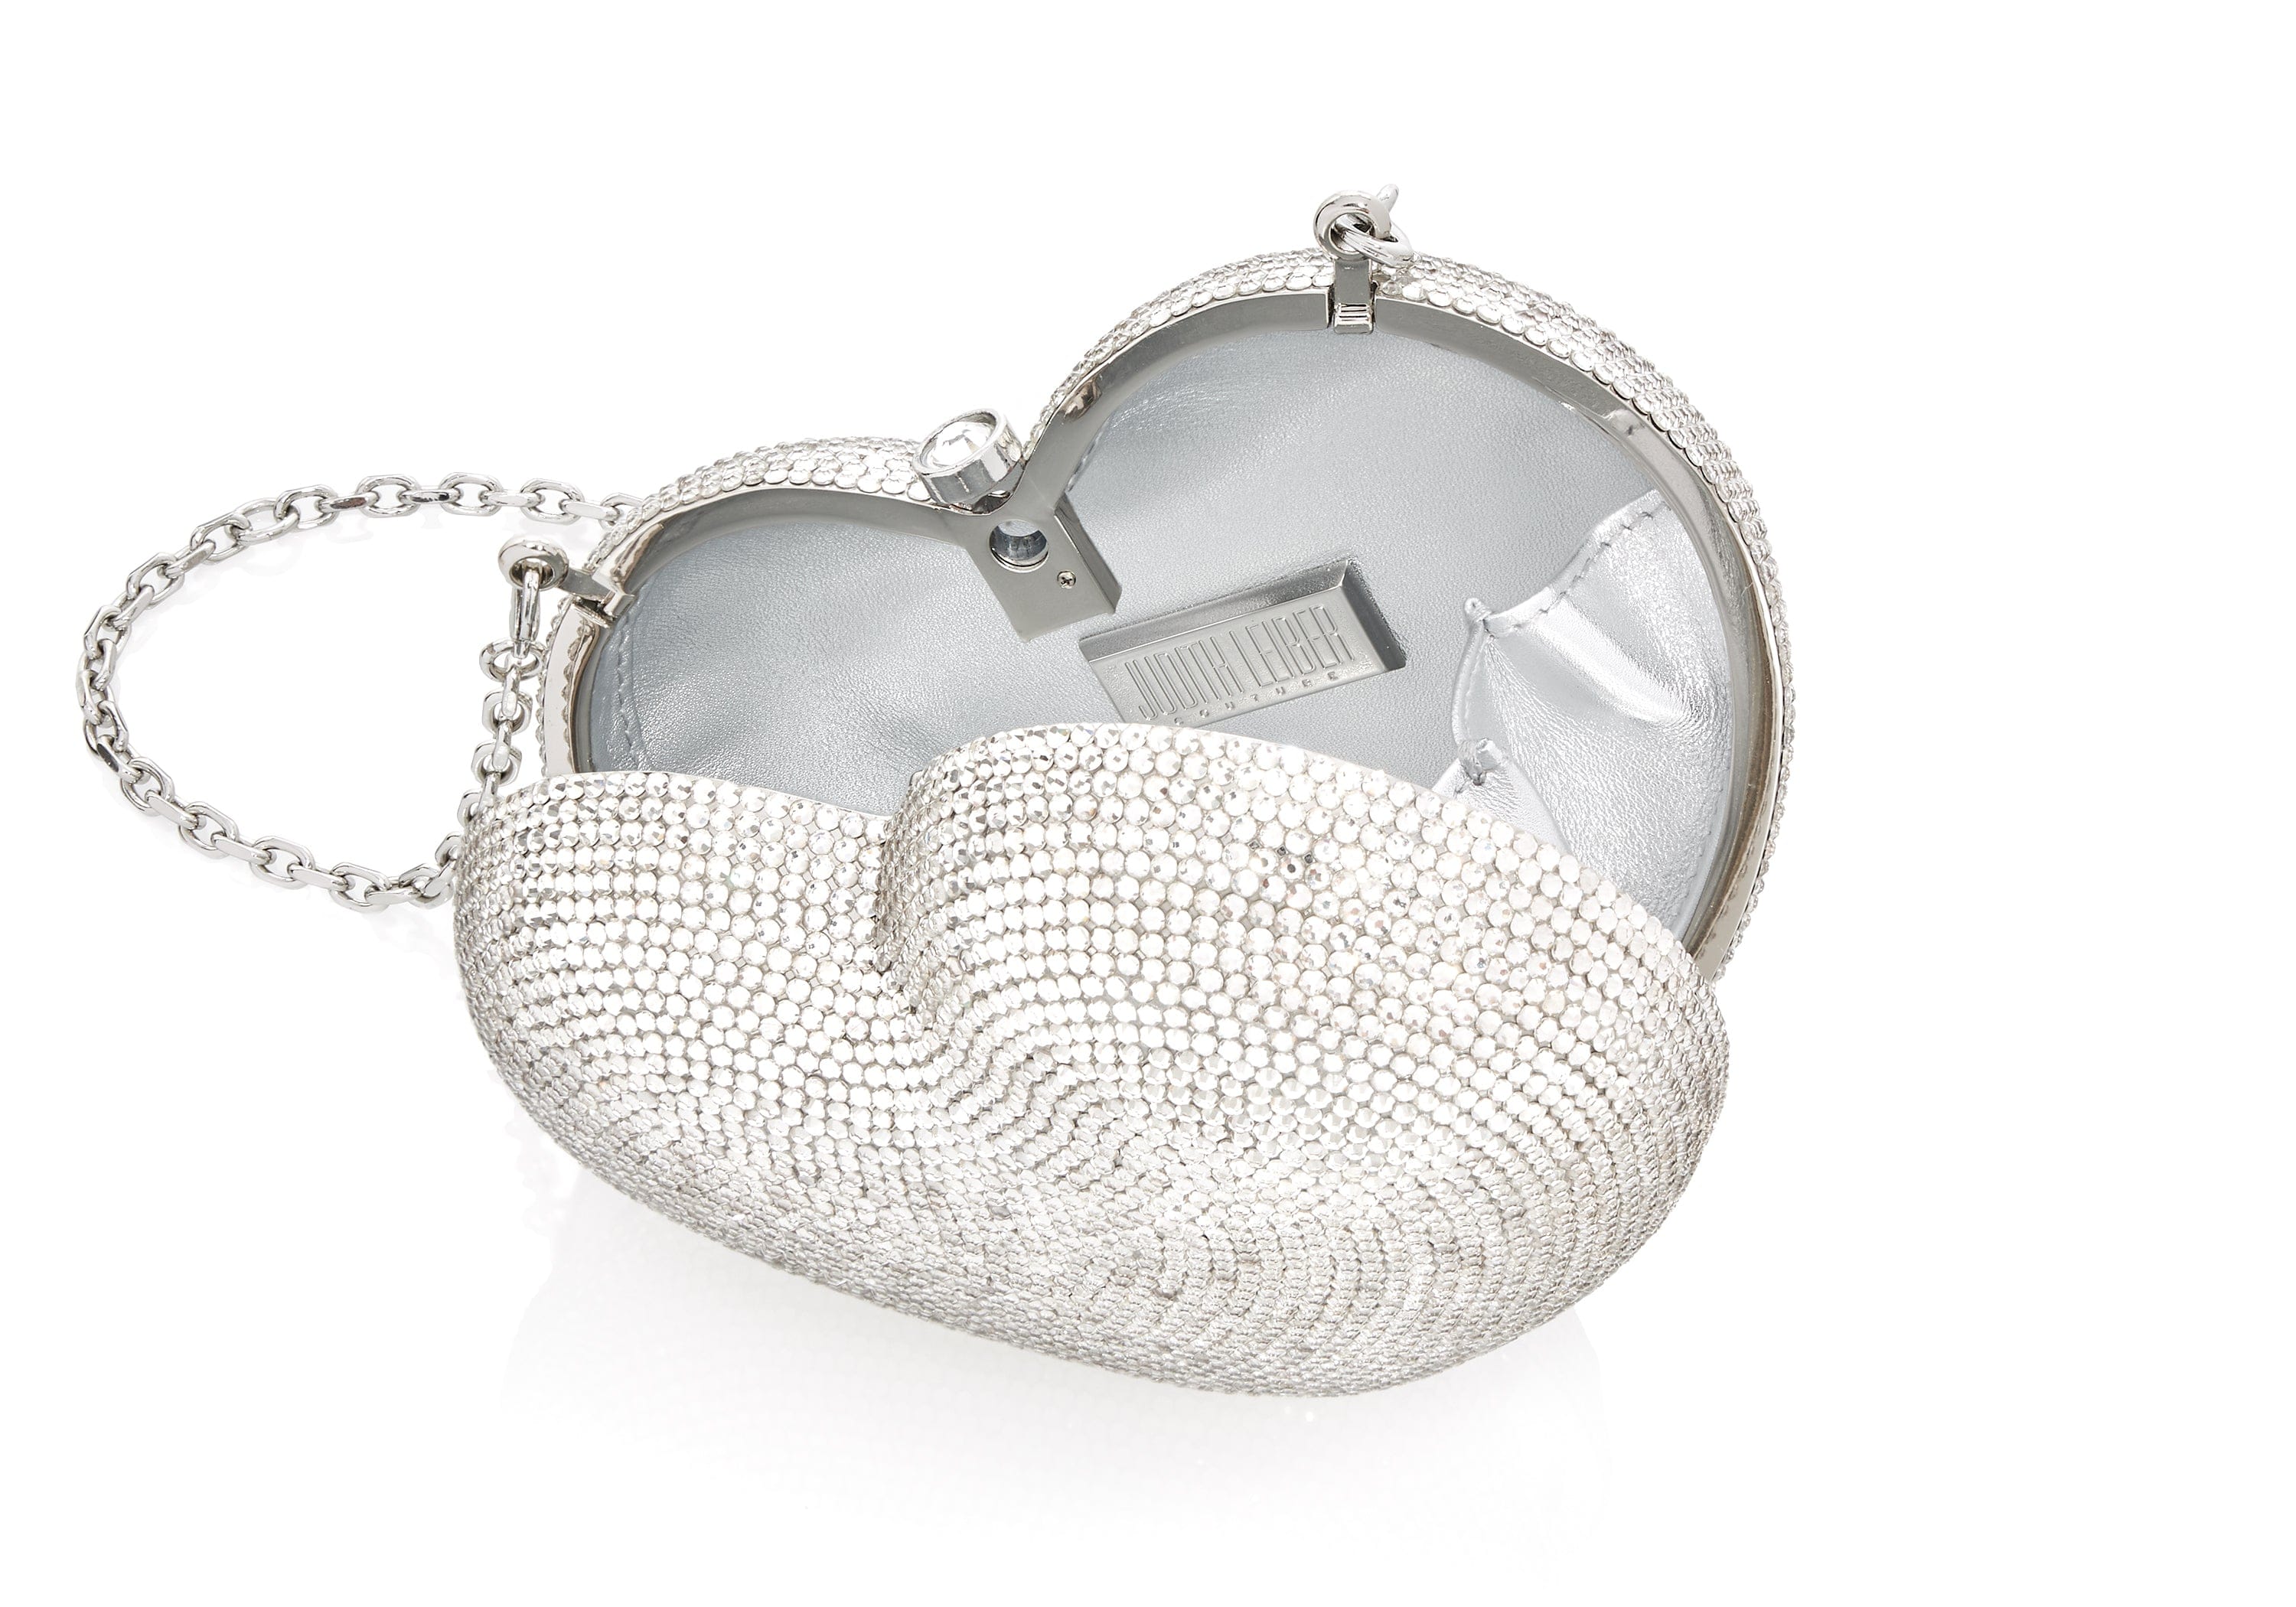 Judith Leiber Lamour Petite Coeur Heart Clutch in Silver Light Rose